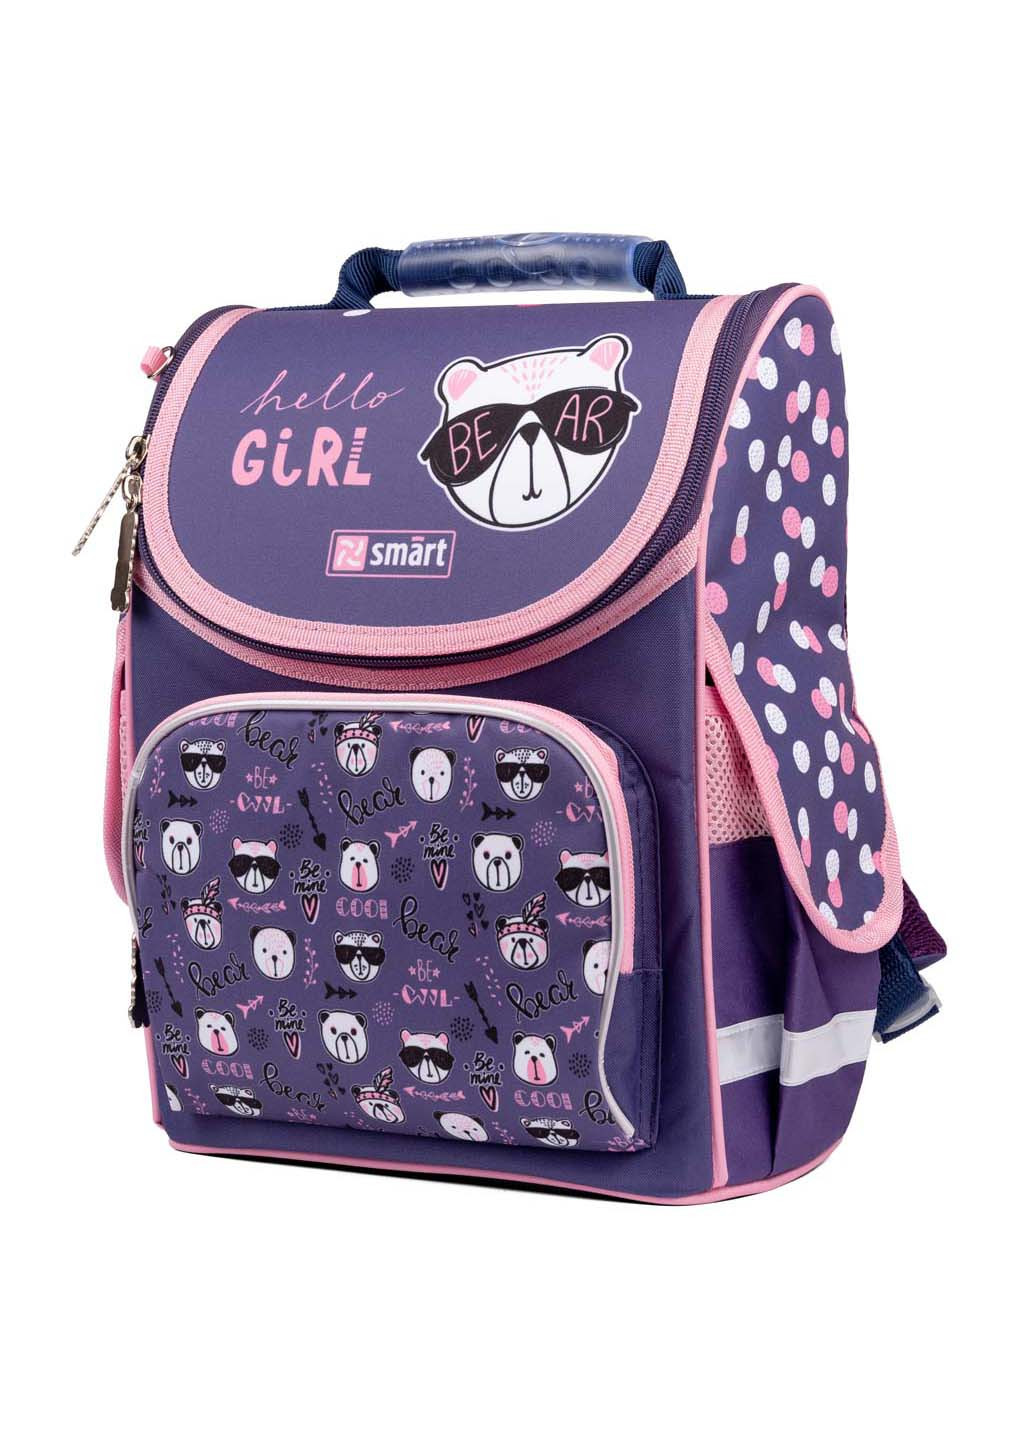 Рюкзак школьный каркасный PG-11 Hello, girl! Smart (260163830)